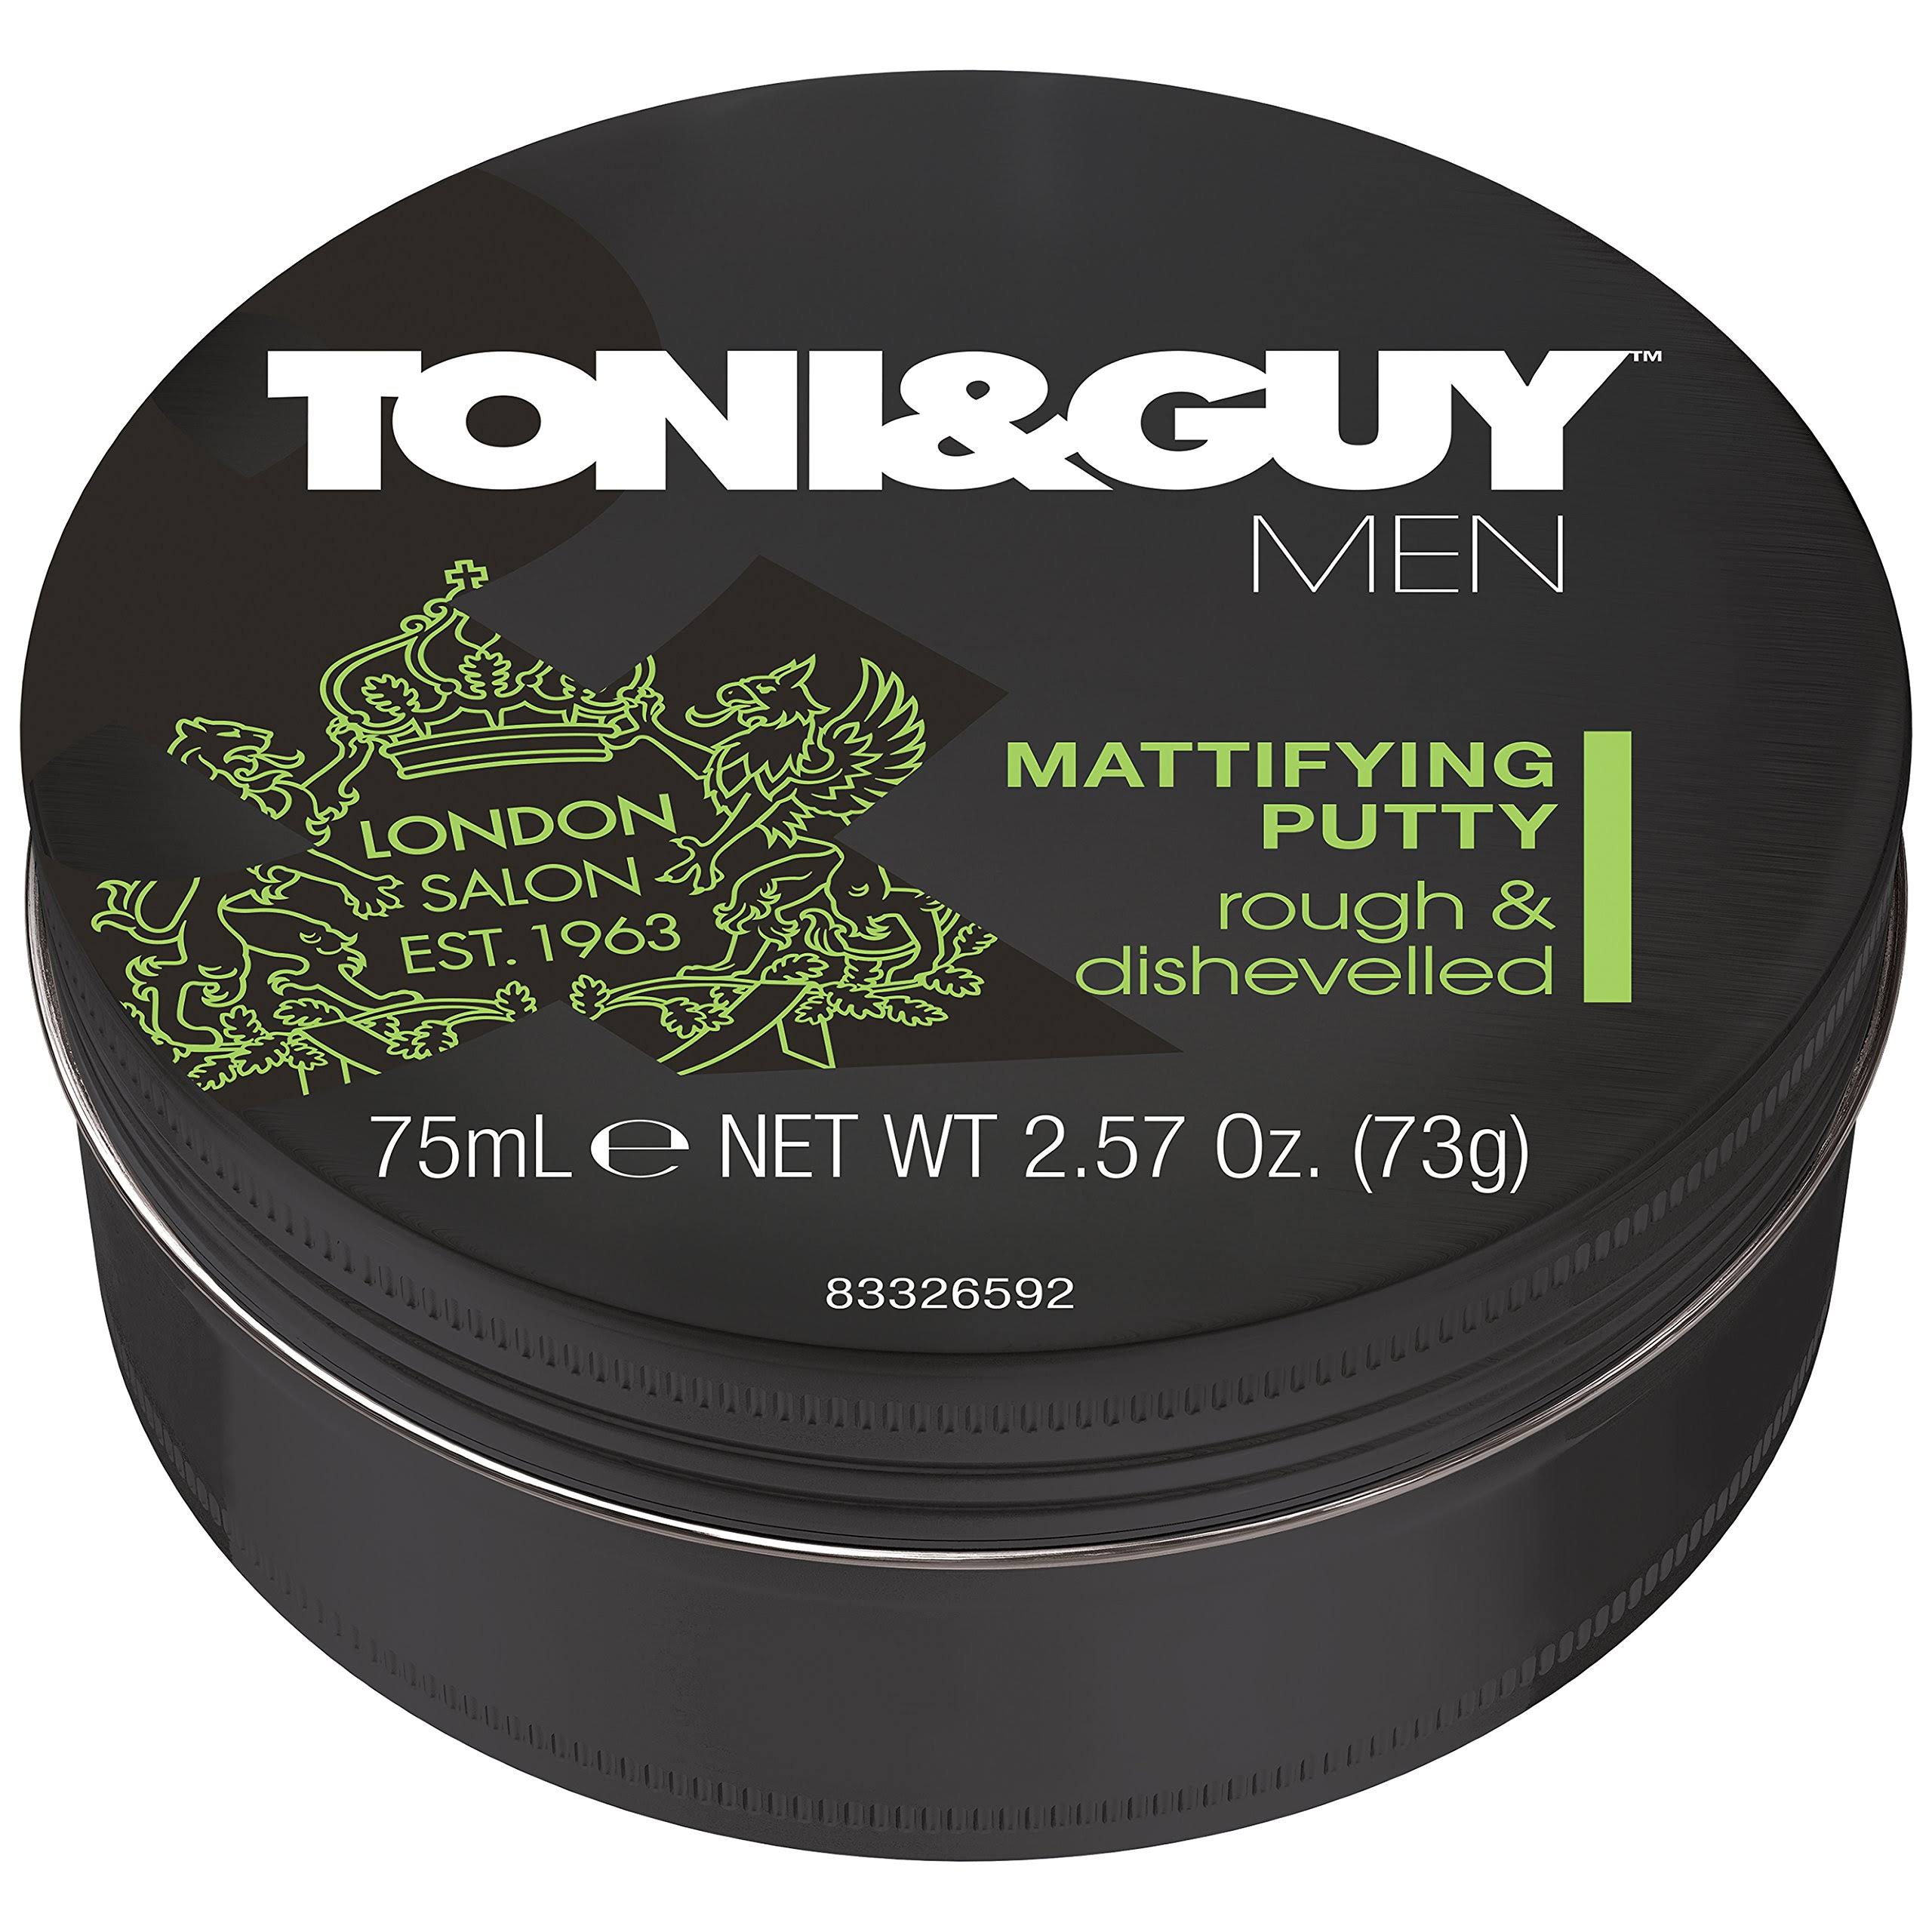 Toni&Guy Men Mattifying Putty 75ml